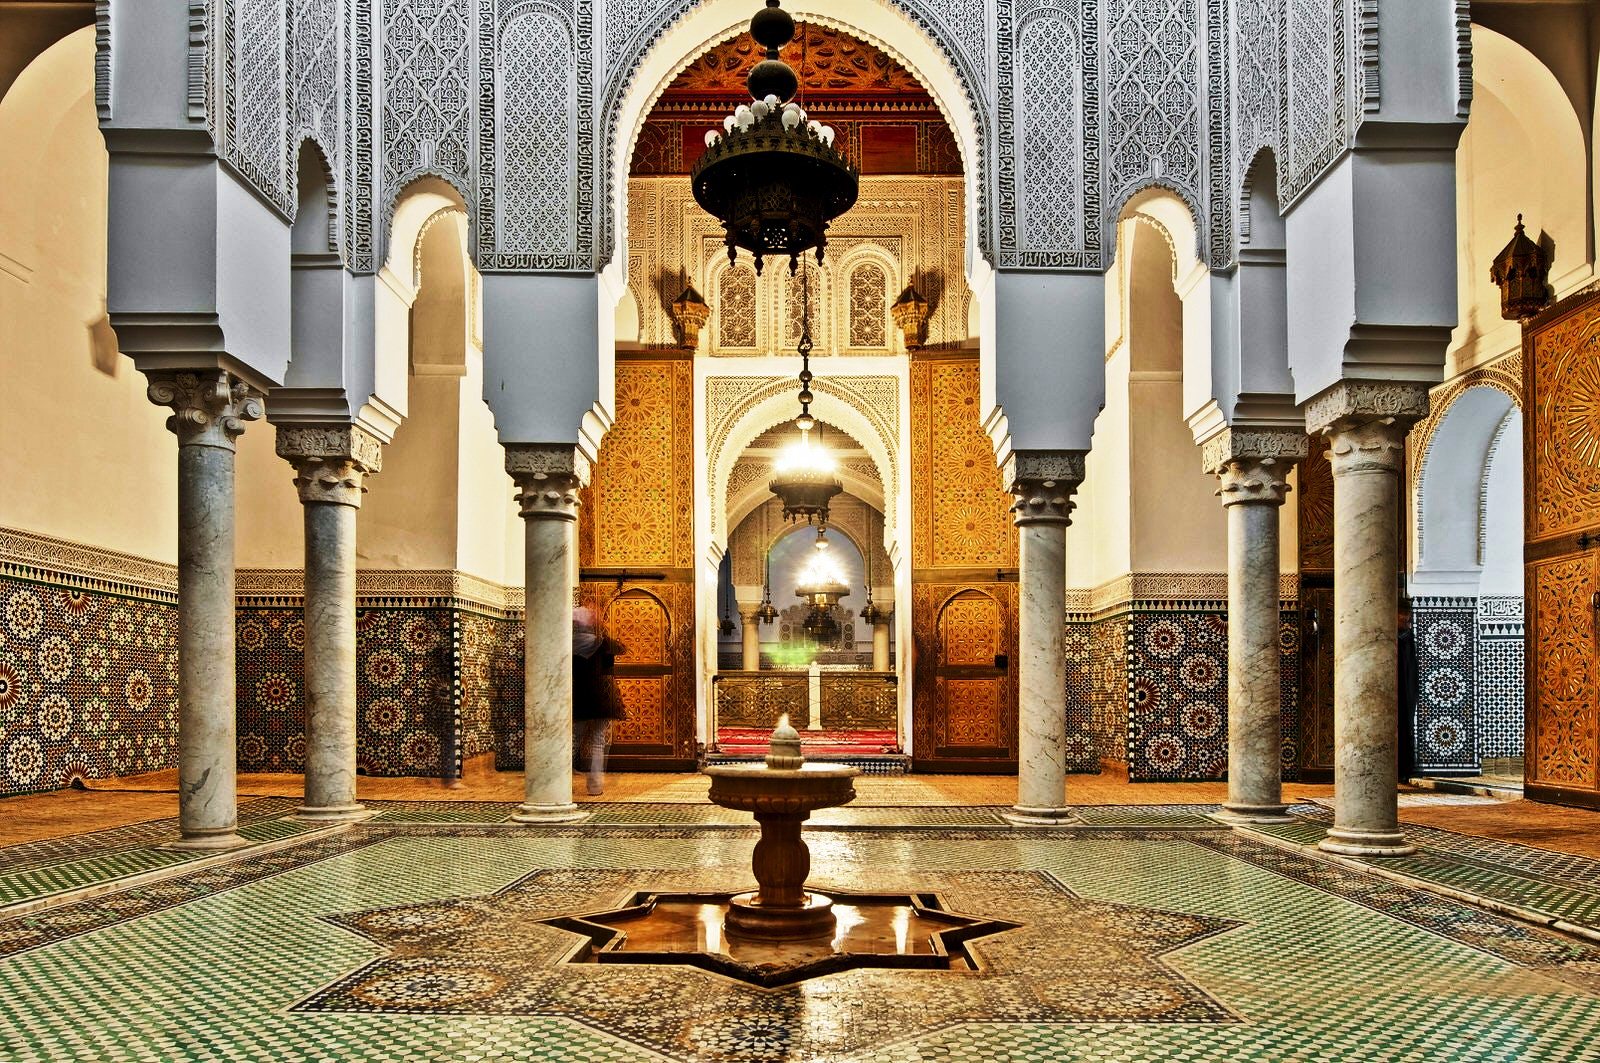 Meknes city guided tours to explore the medina sites